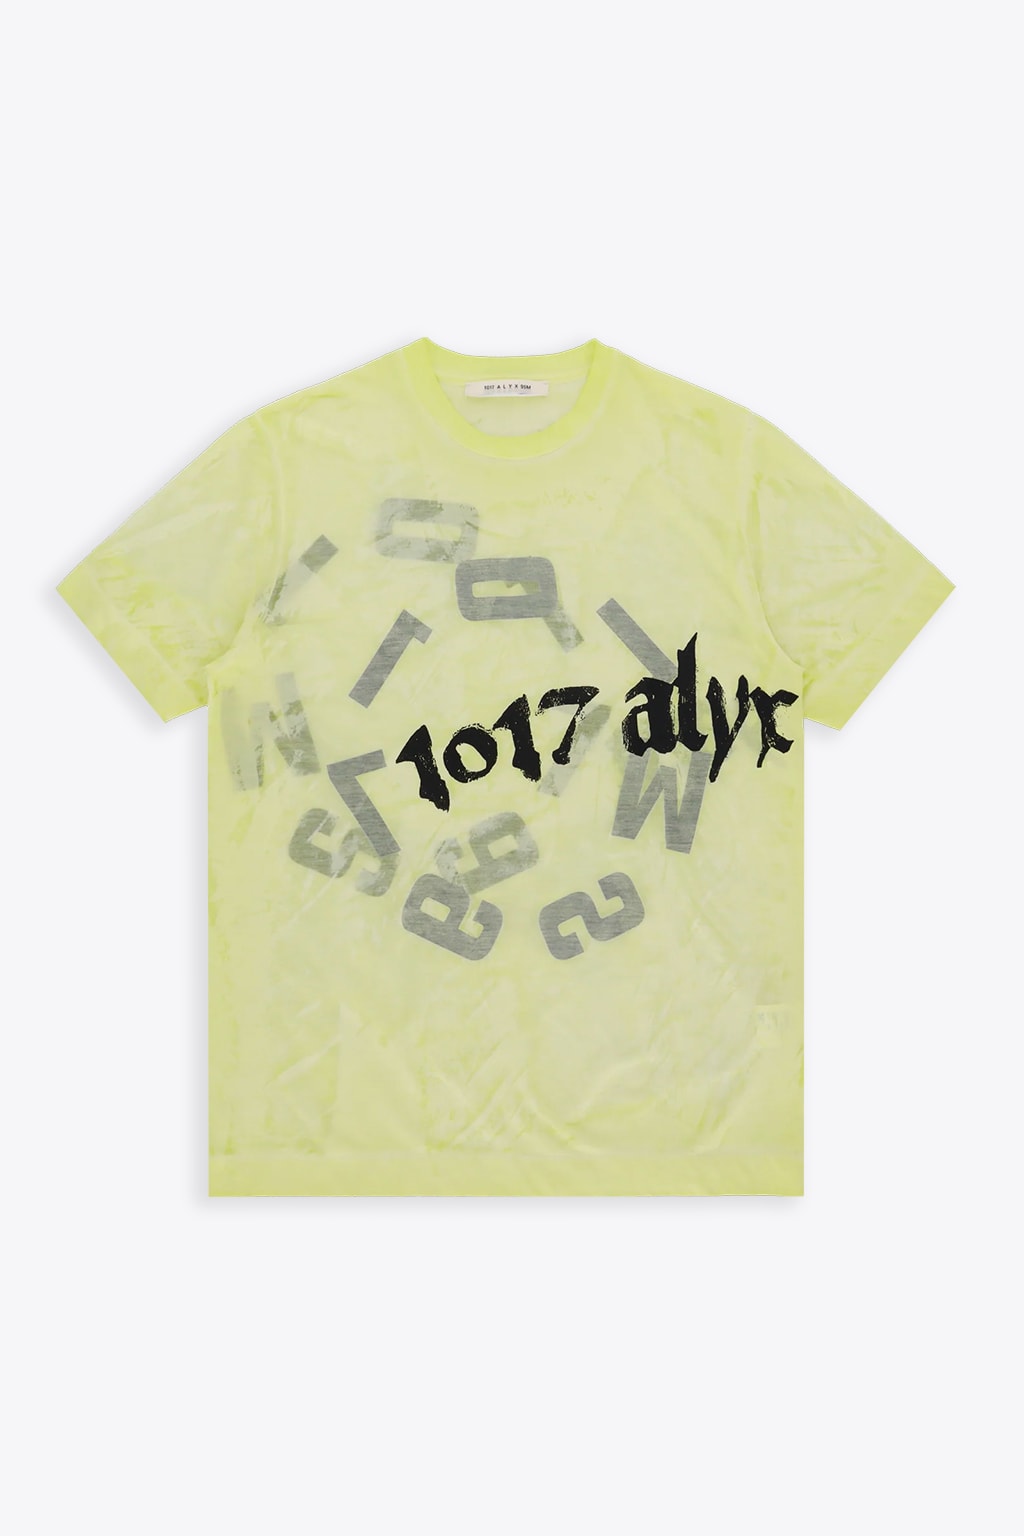 1017 ALYX 9SM Translucent Graphic S/s T-shirt Neon Yellow Cotton Translucent T-shirt - Translucent Graphic S/s T-shirt